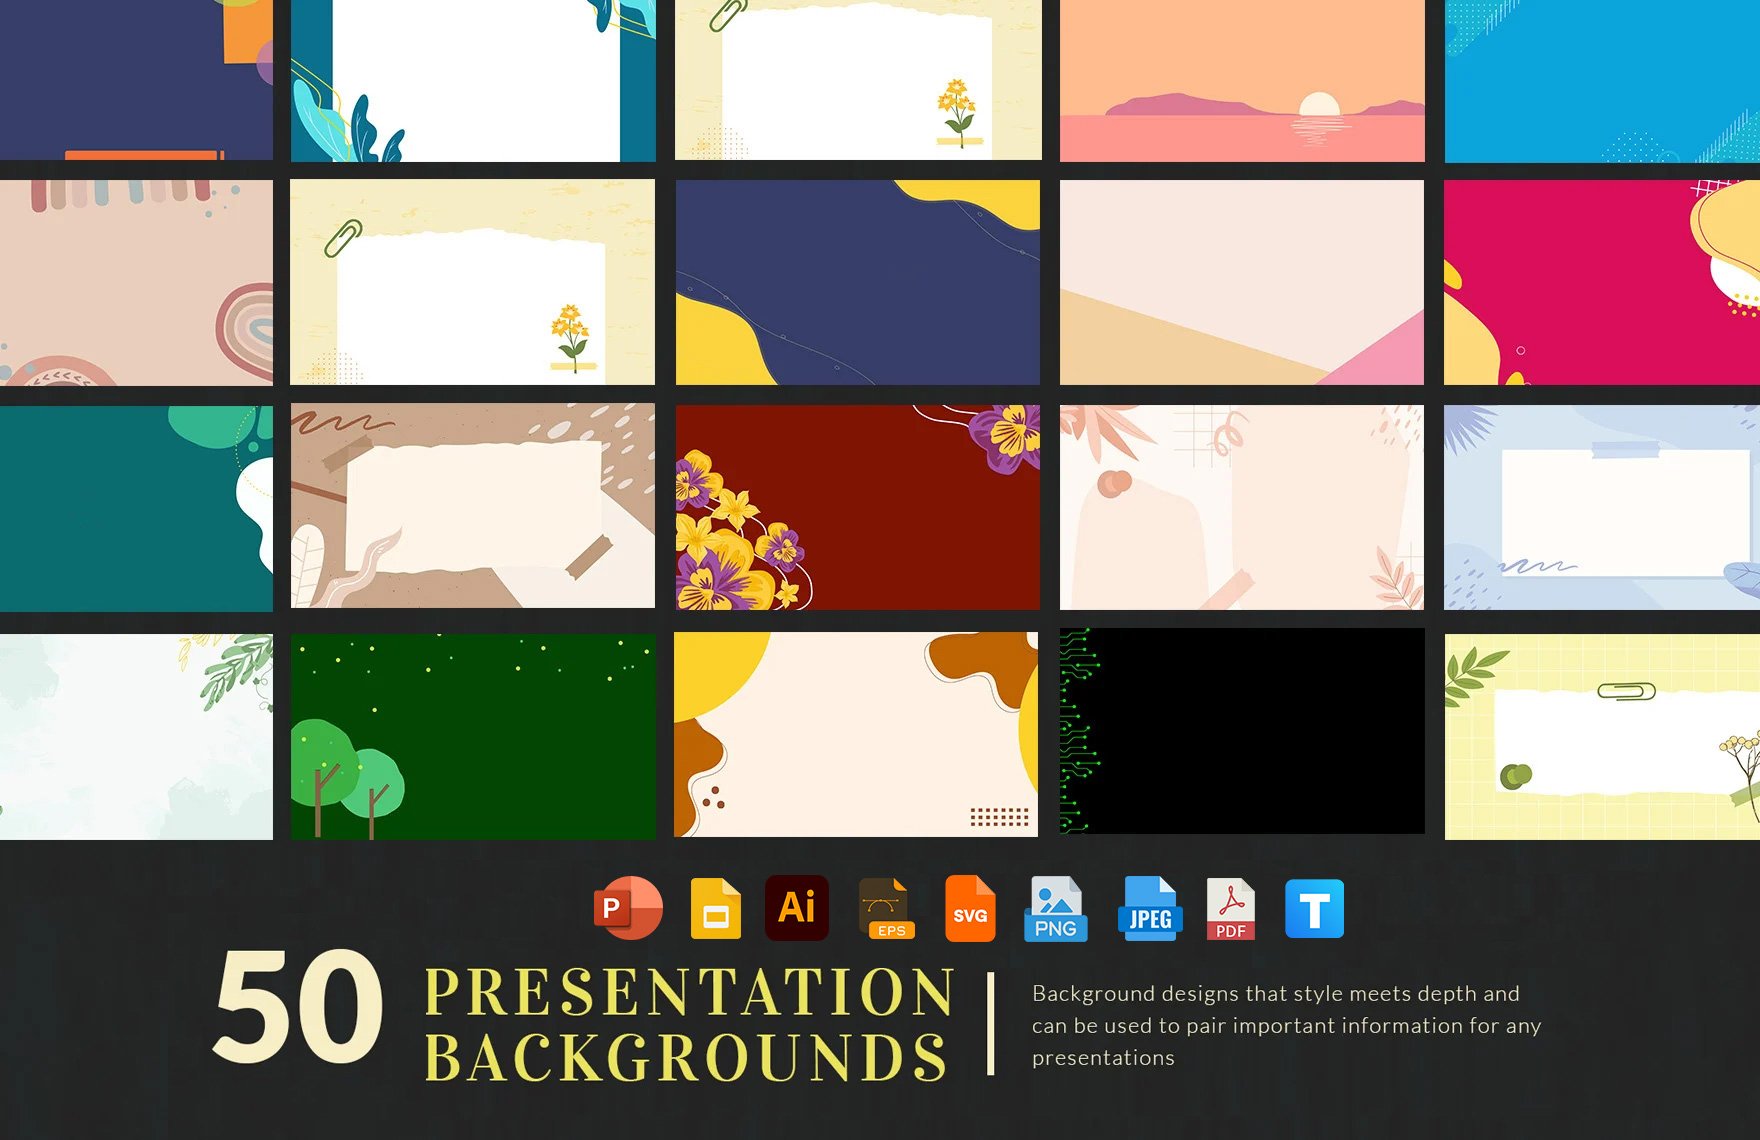 Free Backgrounds Template in PDF, Illustrator, PowerPoint, Google Slides, EPS, SVG, PNG, JPEG